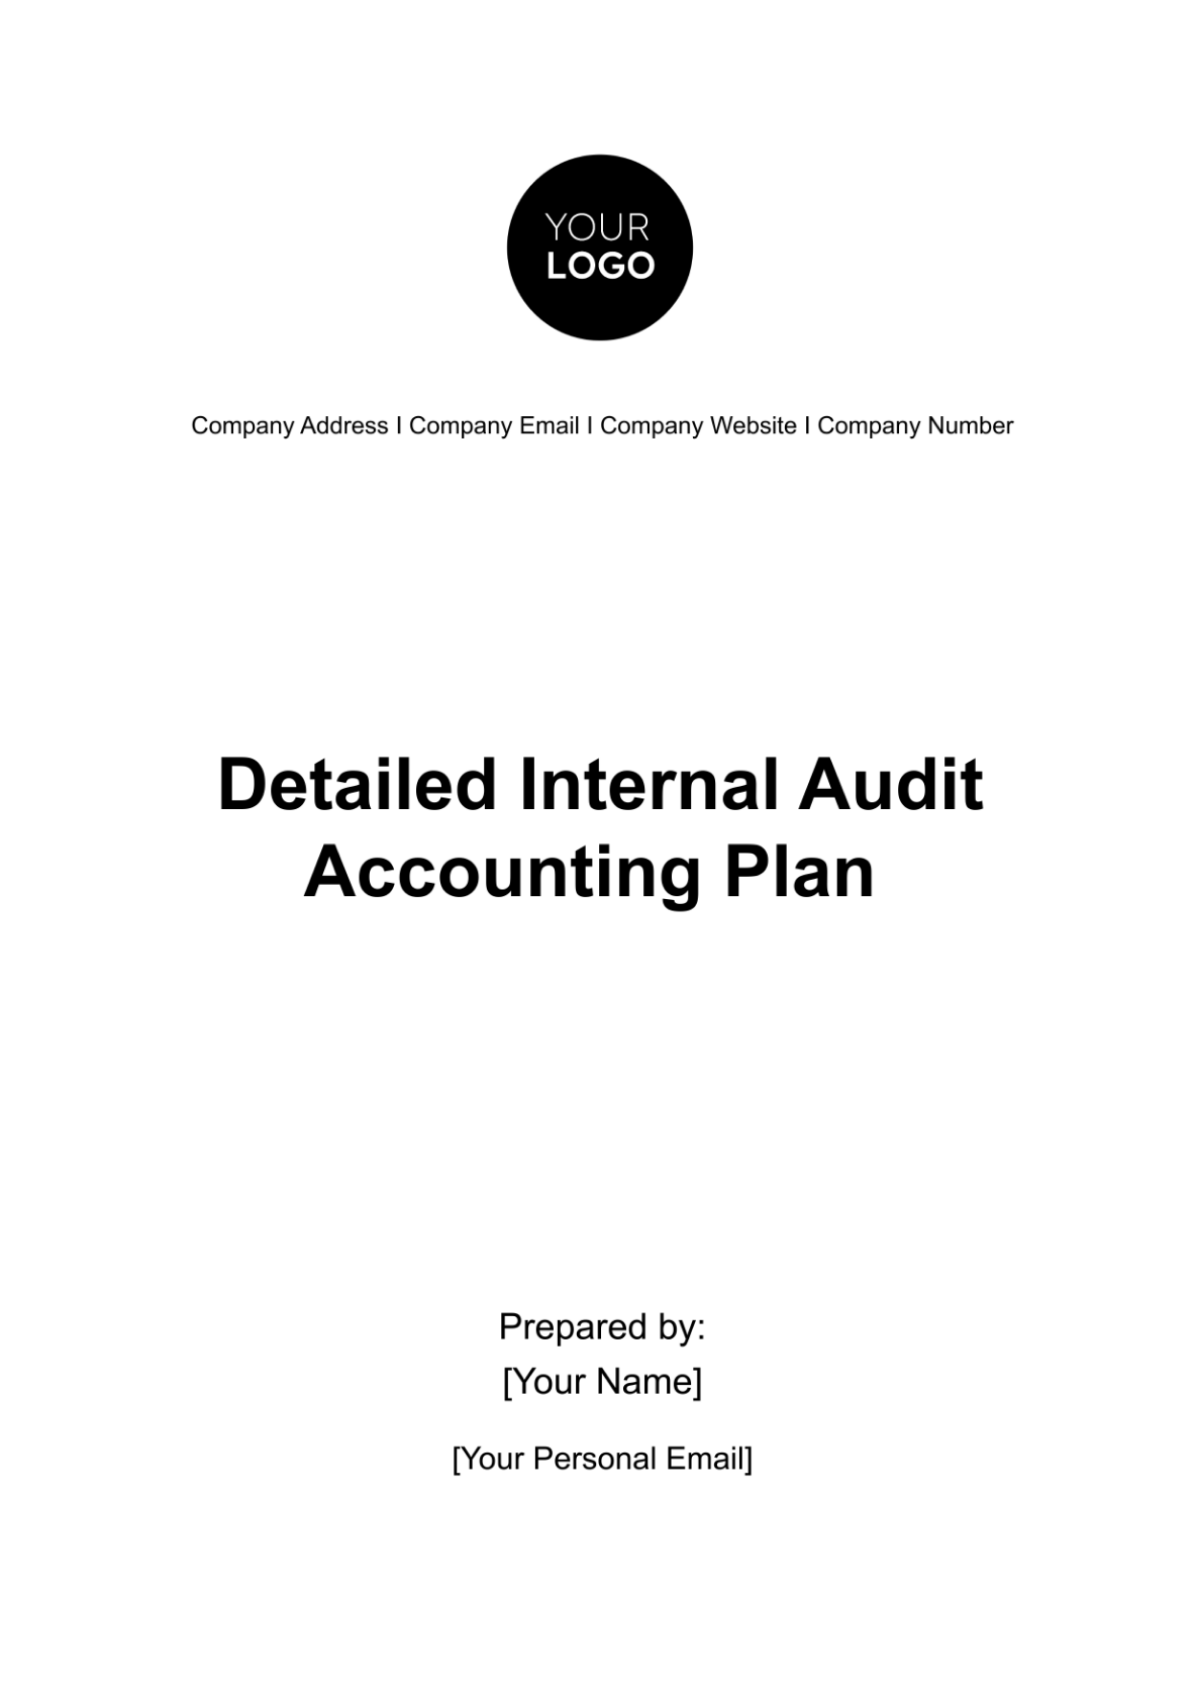 Free Detailed Internal Audit Accounting Plan Template